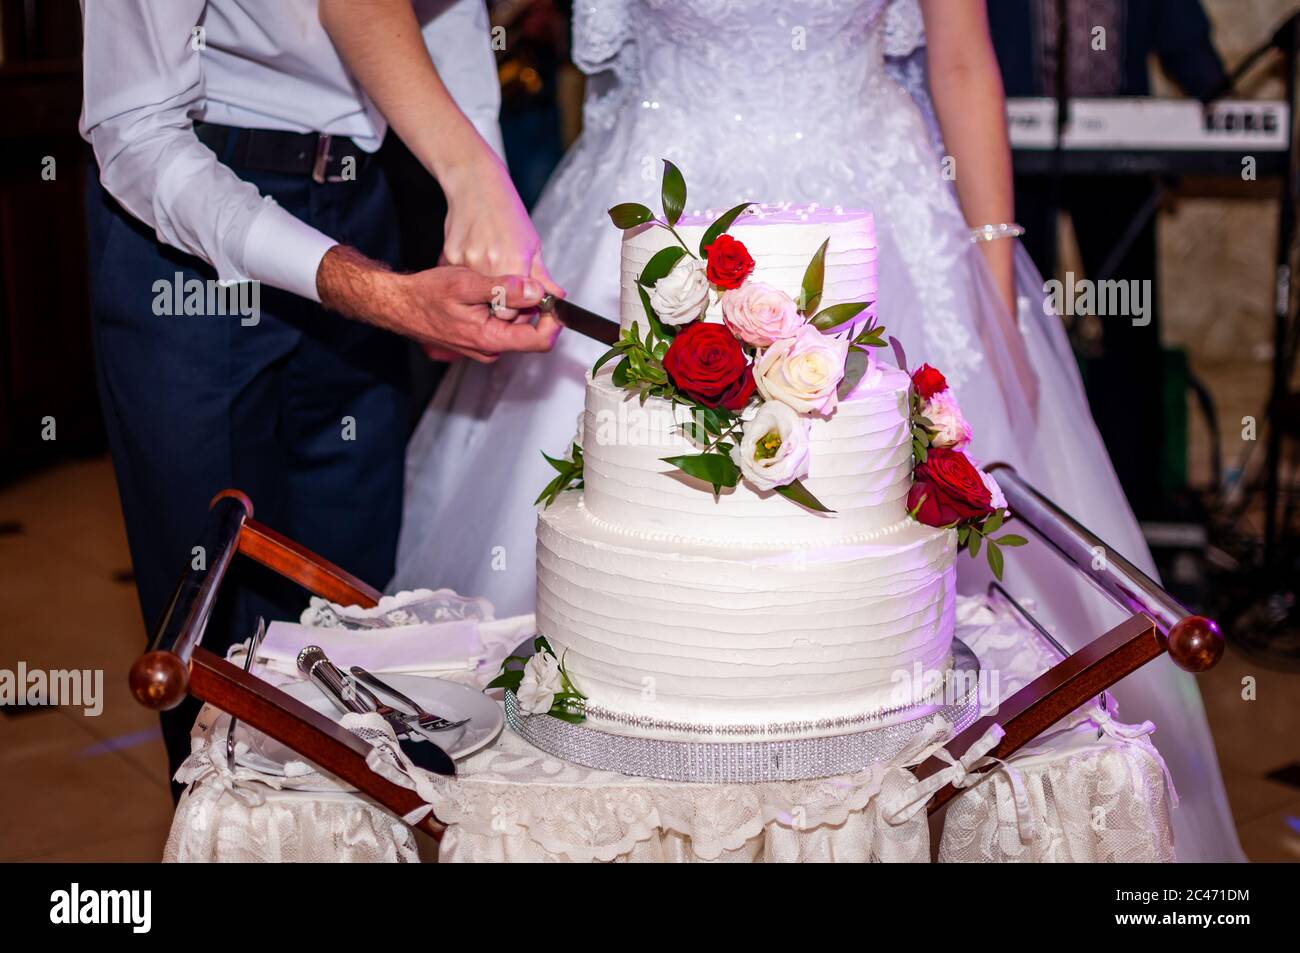 Bride and groom cuting white wedding cake Stock Photo